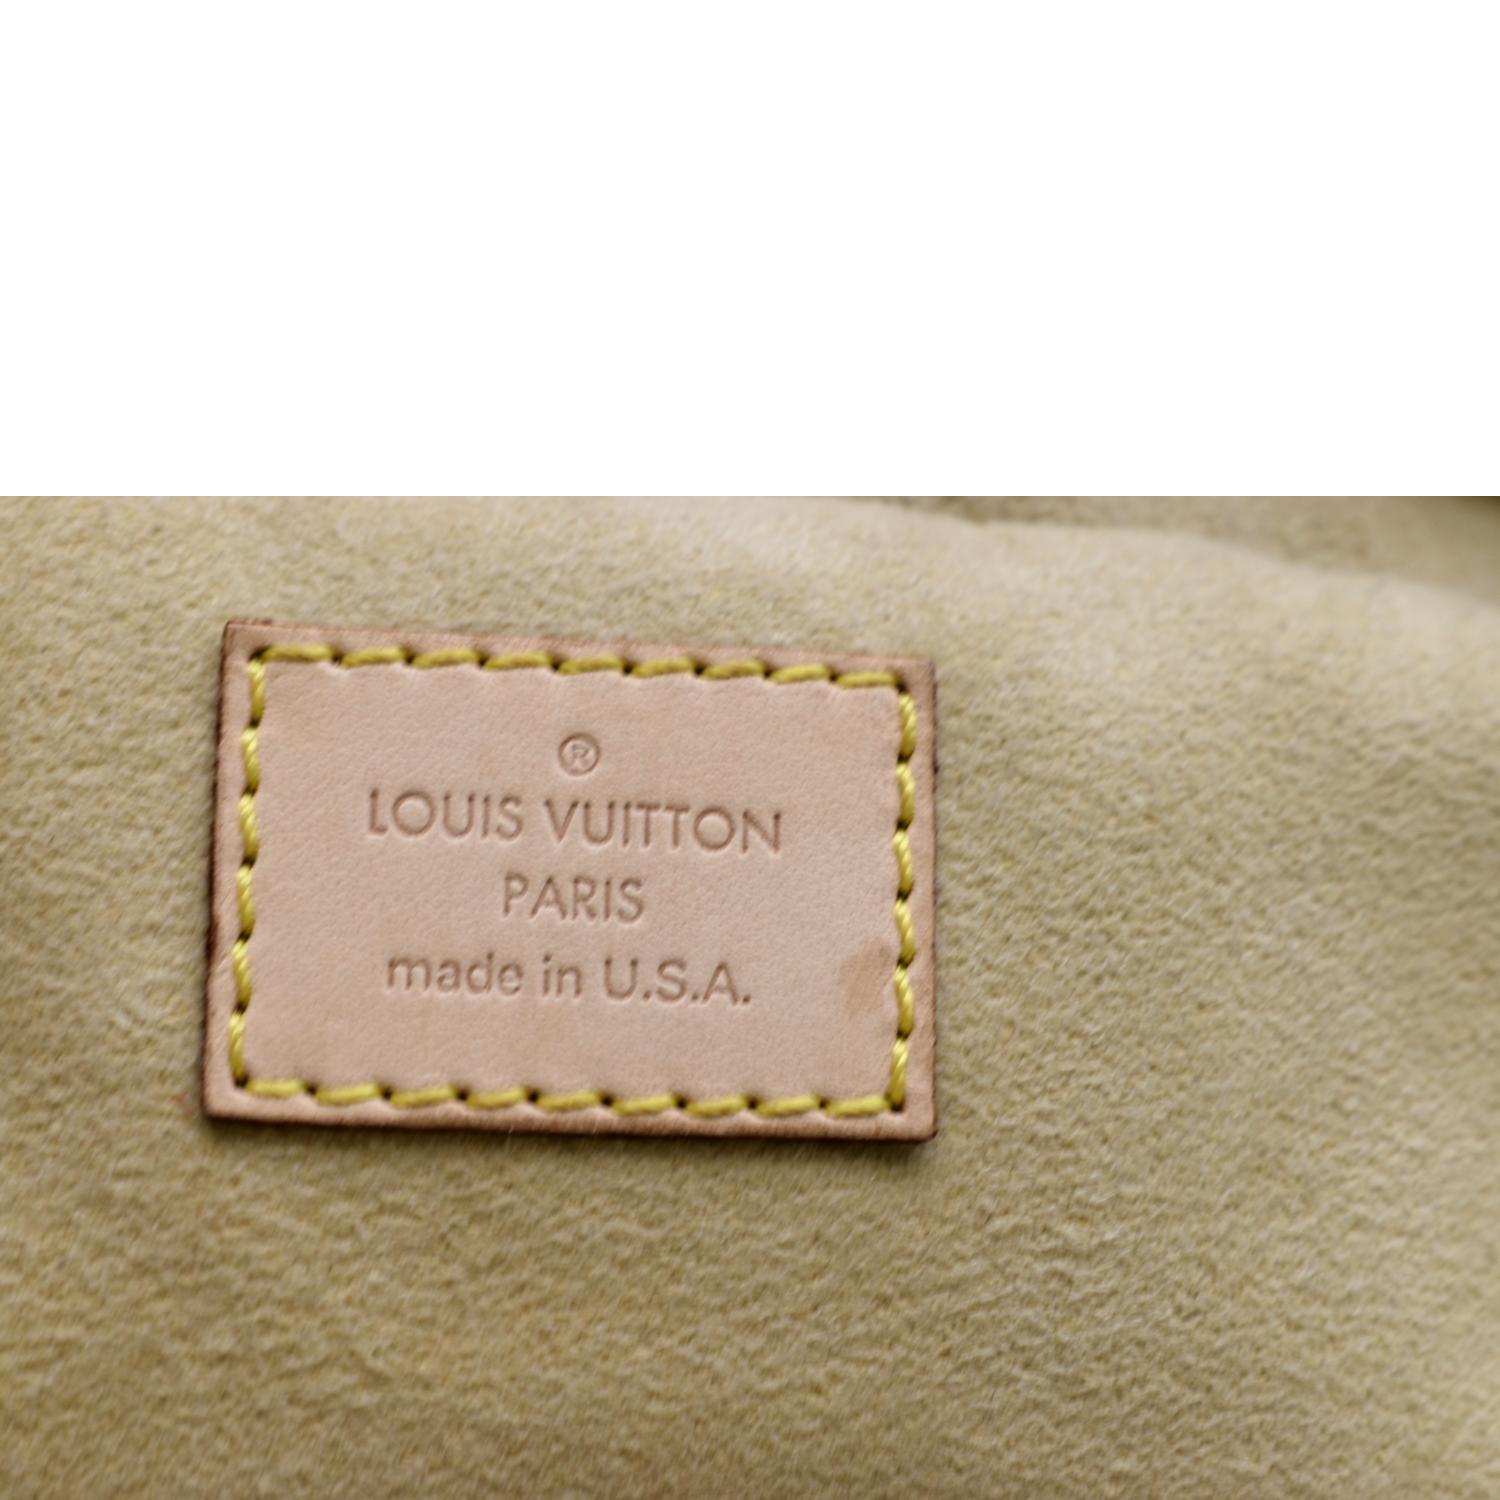 LOUIS VUITTON Monogram Palermo GM Large Tote Shoulder Bag Purse  Made in  USA  eBay